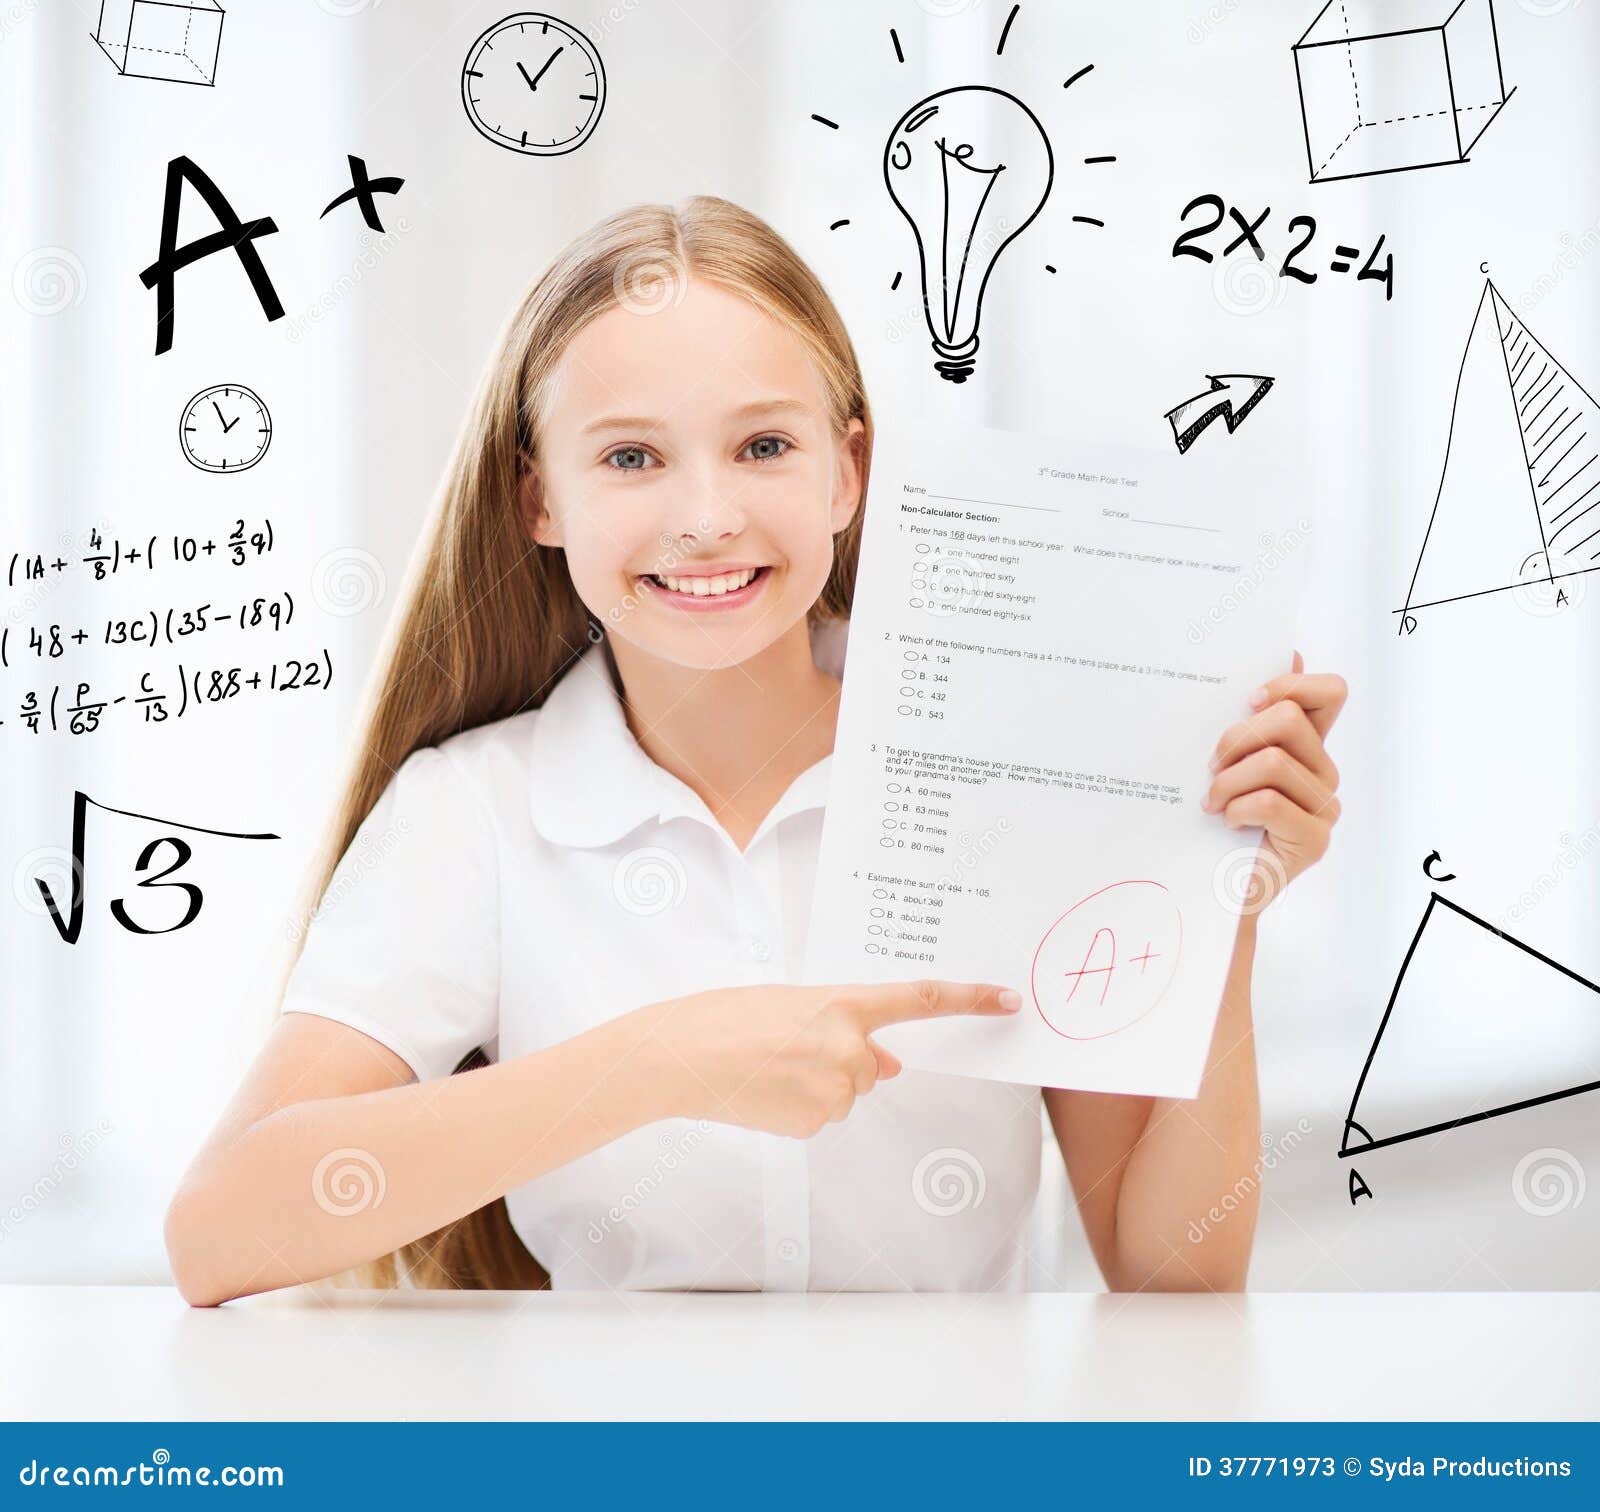 Hoop van Duizeligheid Ruilhandel Girl with Test and a Grade at School Stock Image - Image of homework,  checked: 37771973